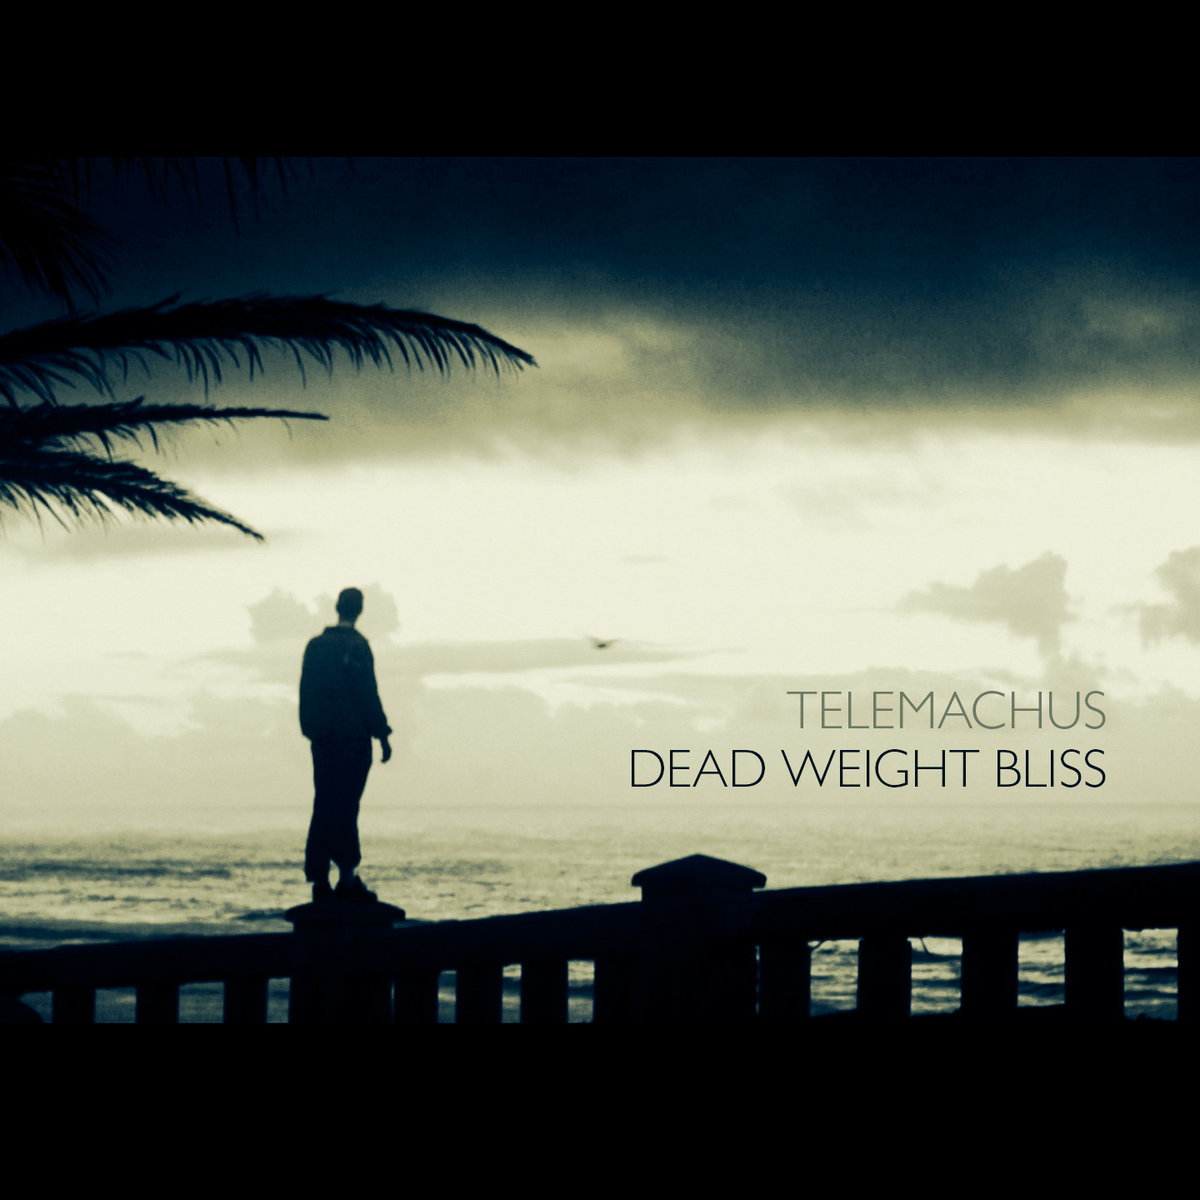 Dead_weight_bliss_telemachus